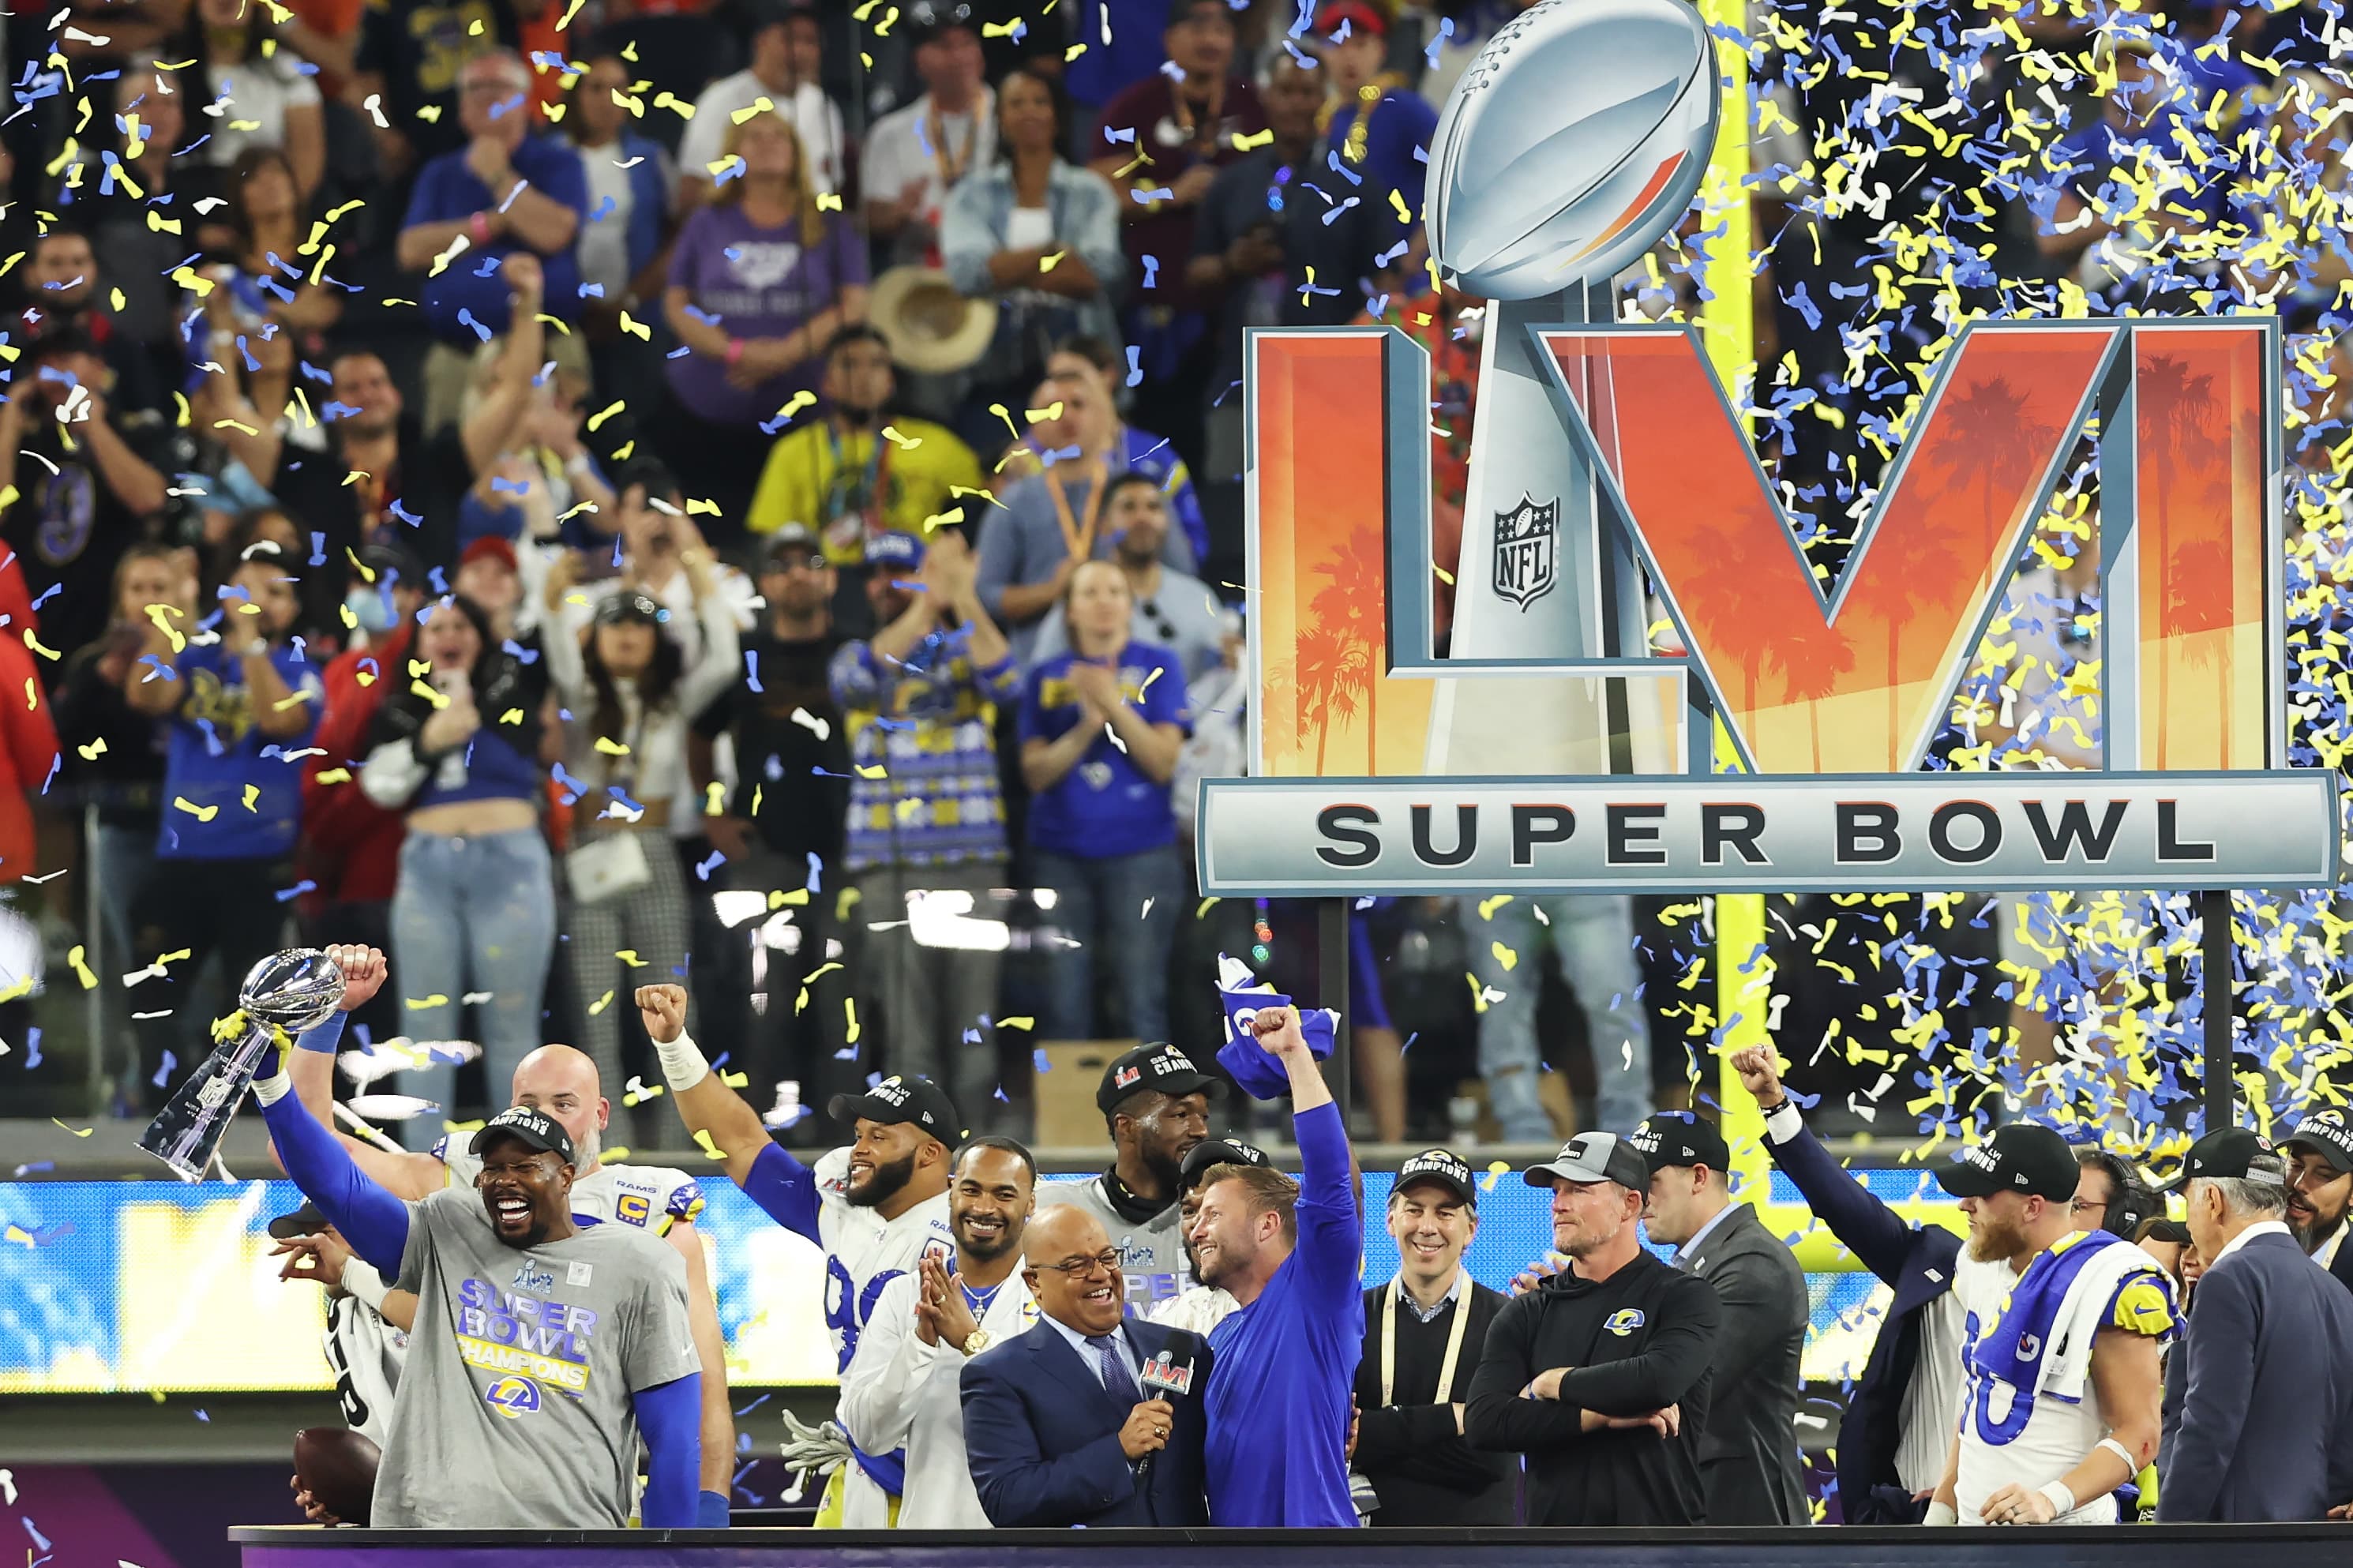 Nike, Pepsi dominate media exposure during Super Bowl